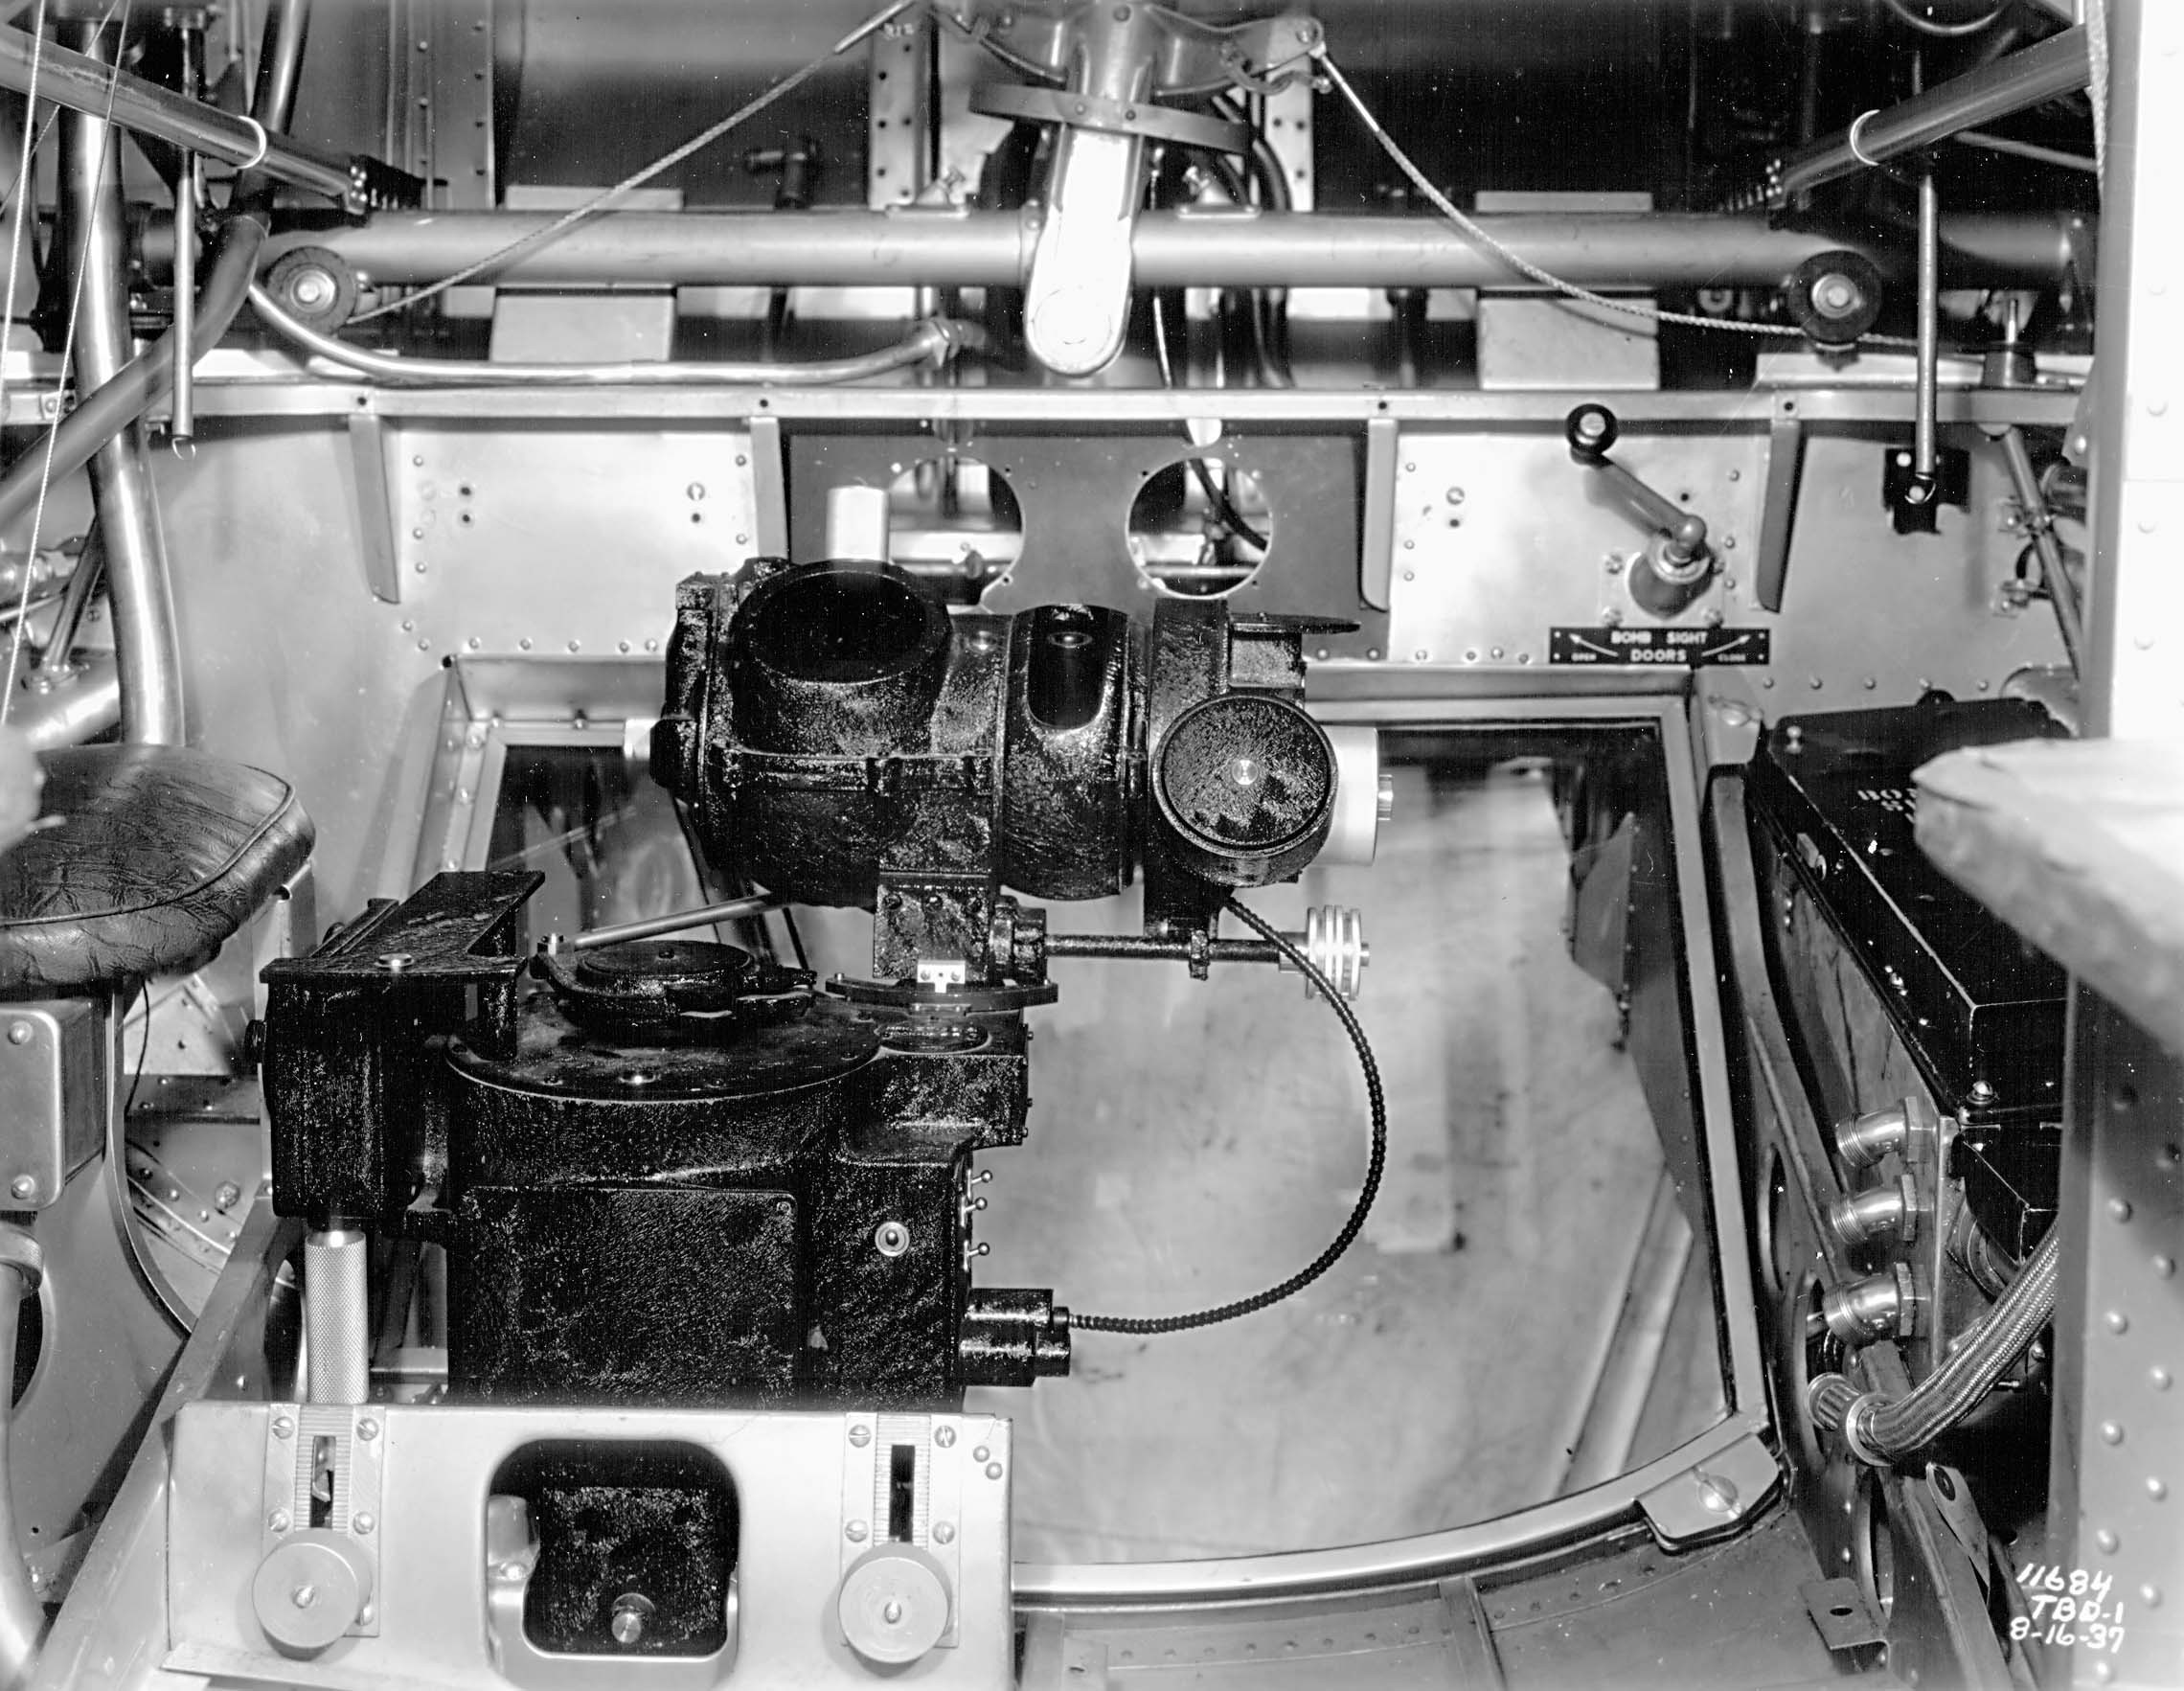 The famous Norden bombsight